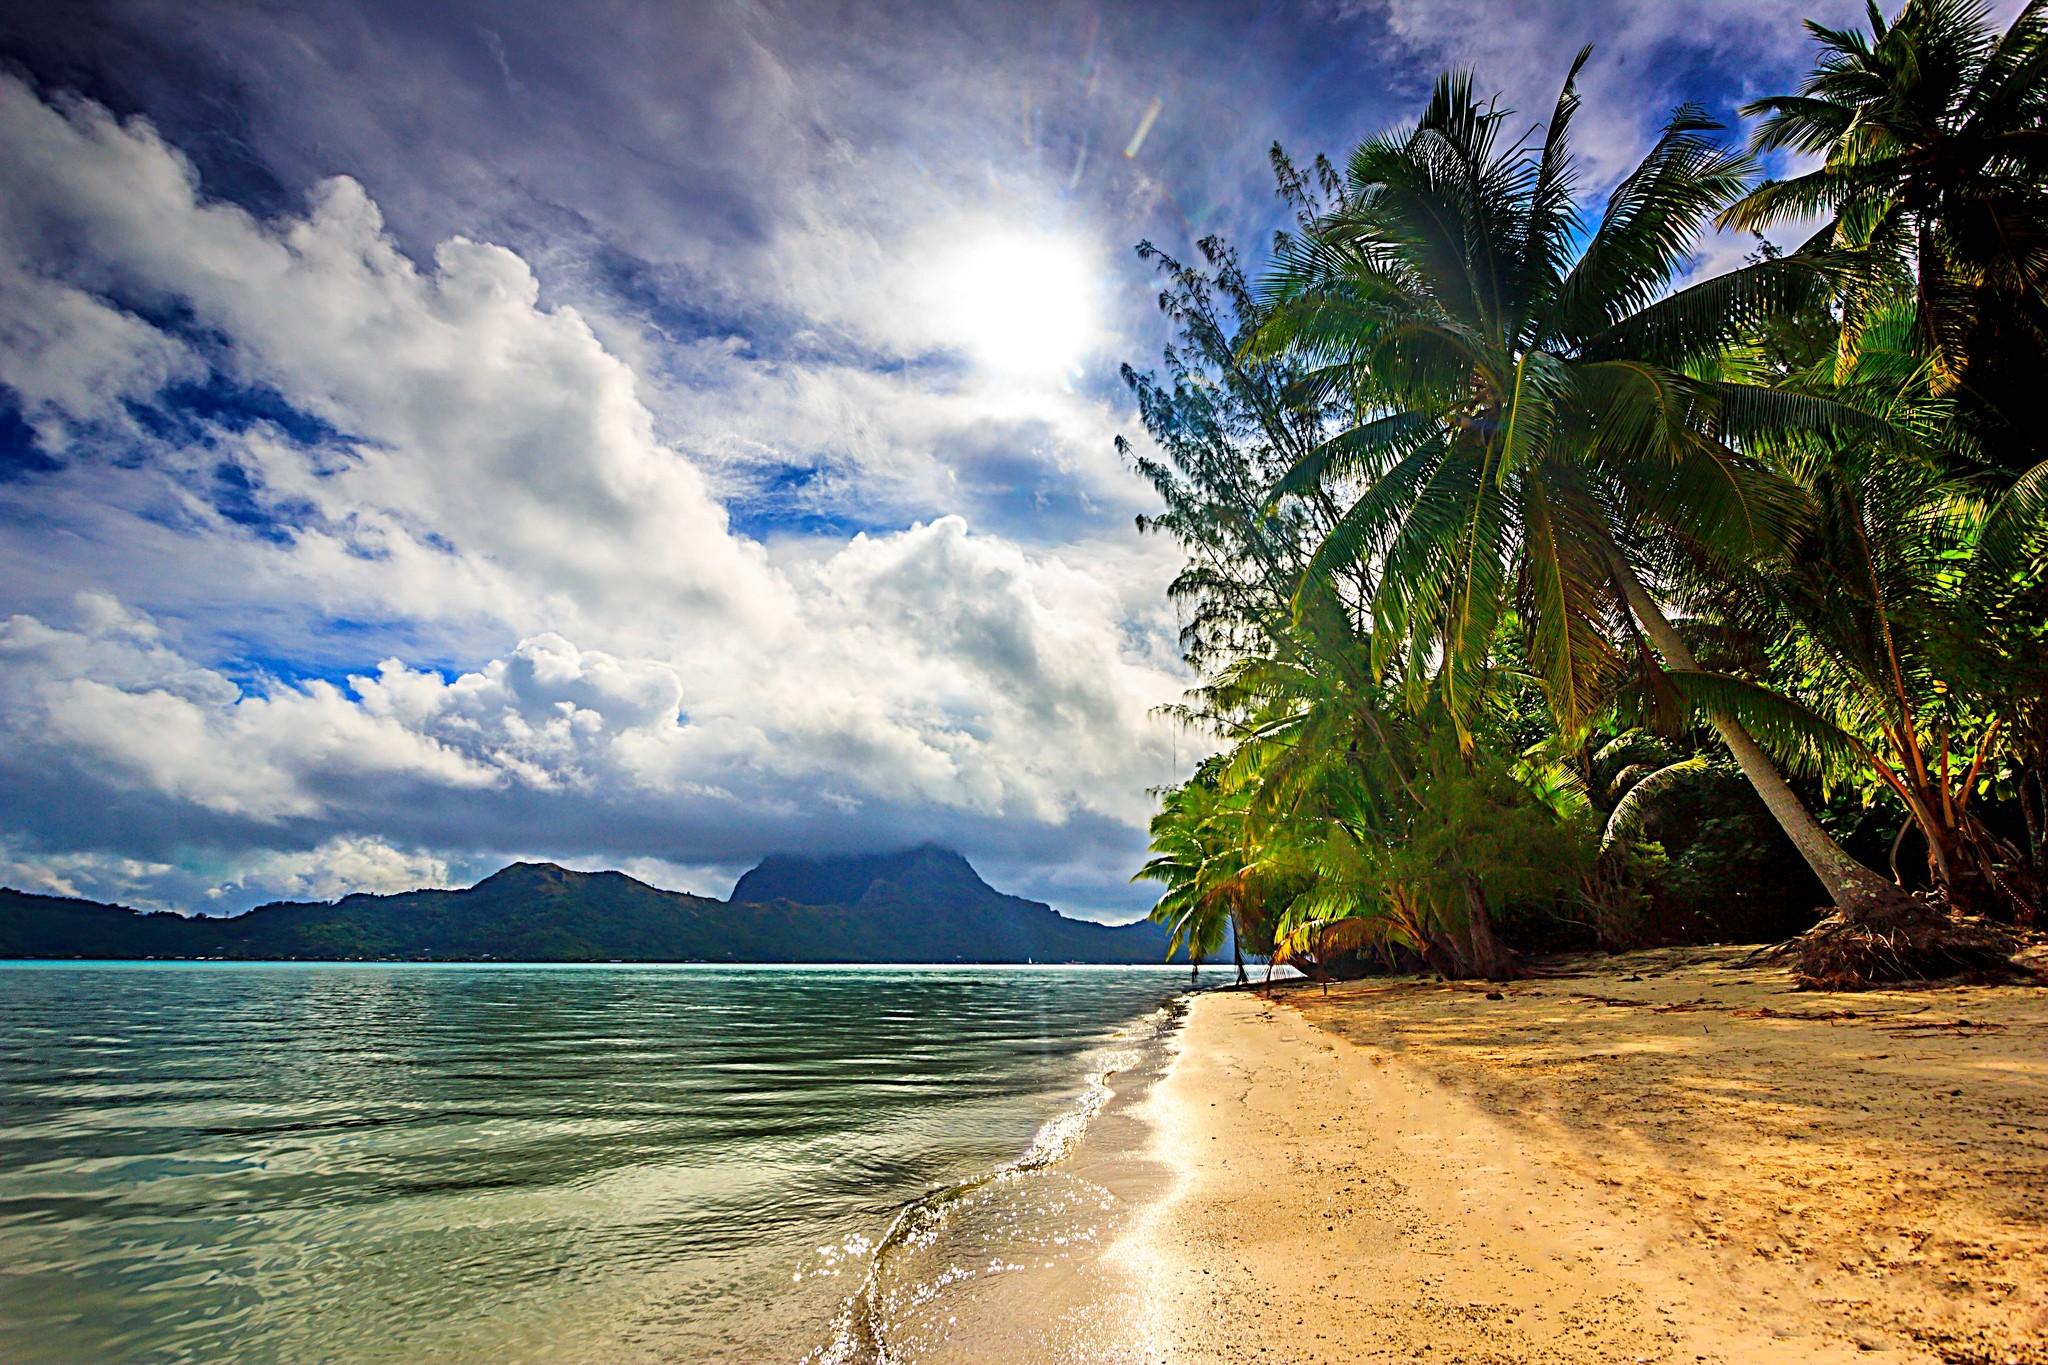 General 2048x1365 nature landscape beach sea palm trees clouds island sunlight tropical Bora Bora French Polynesia